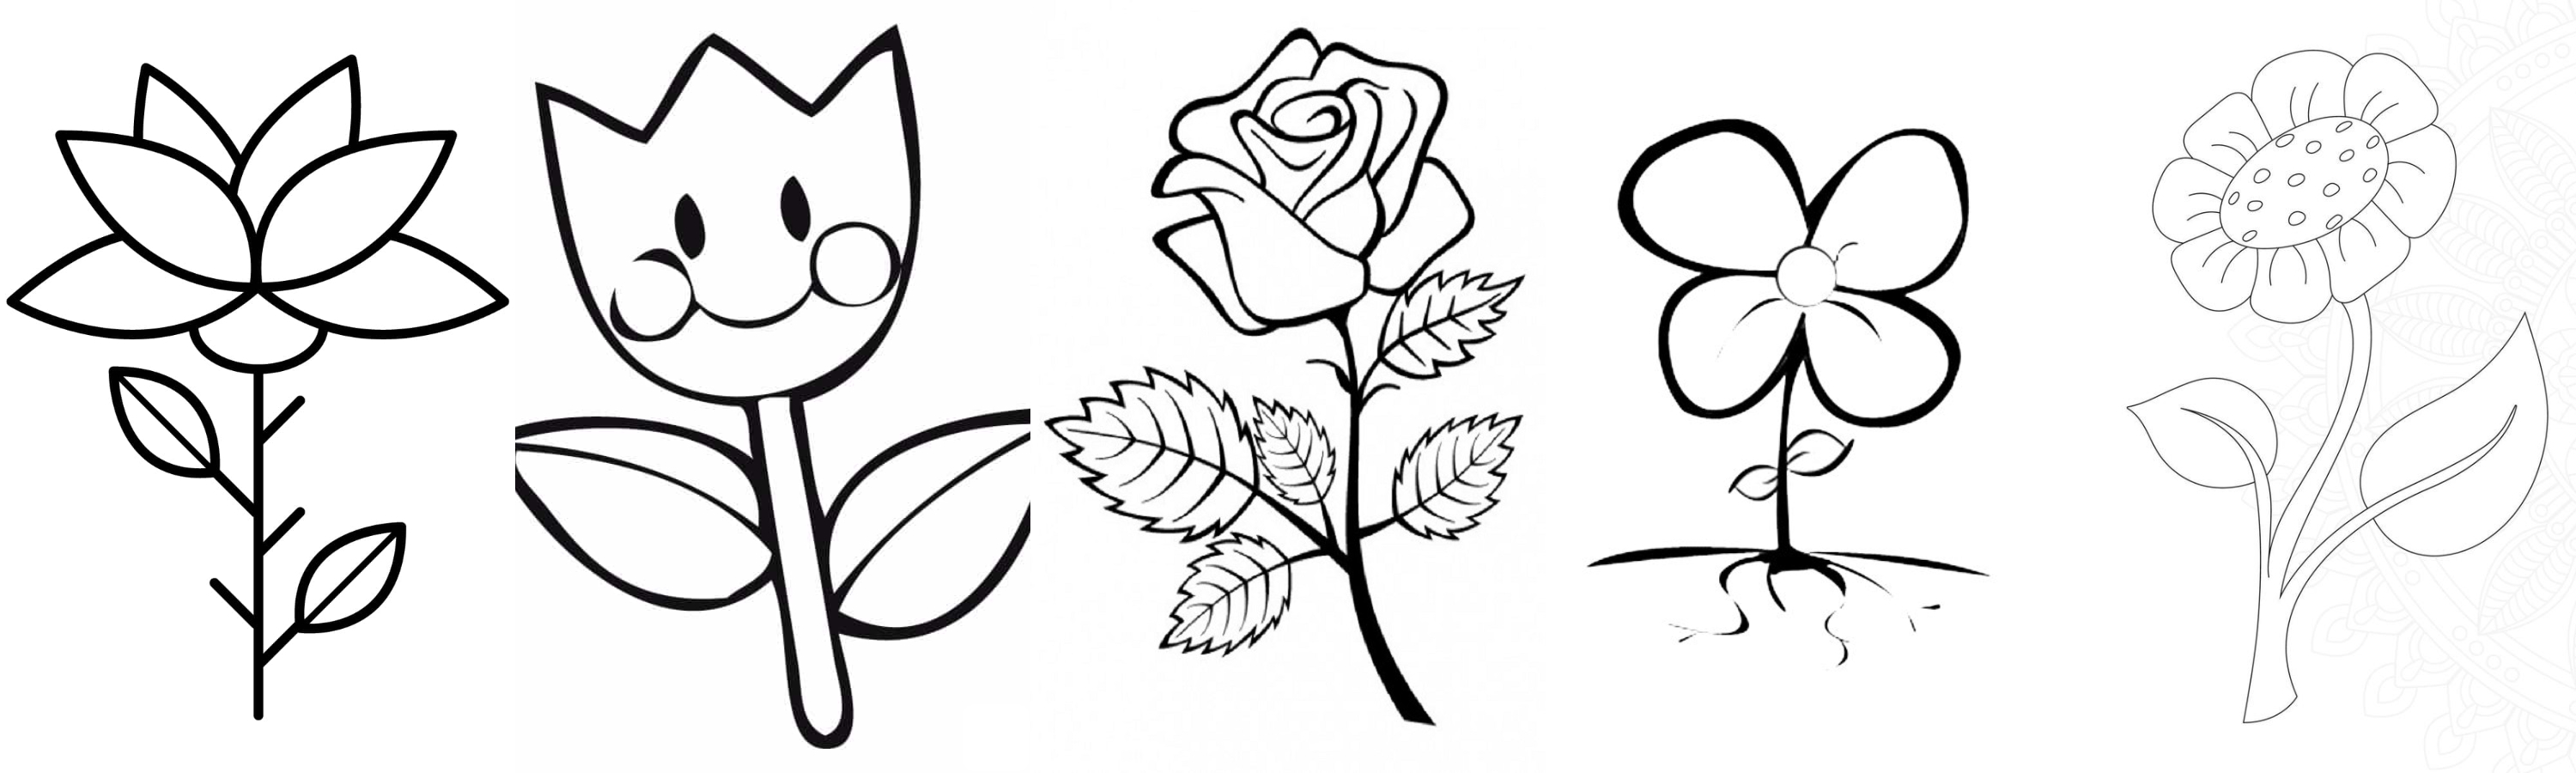 10 ideas de dibujos fáciles para hacer de flores